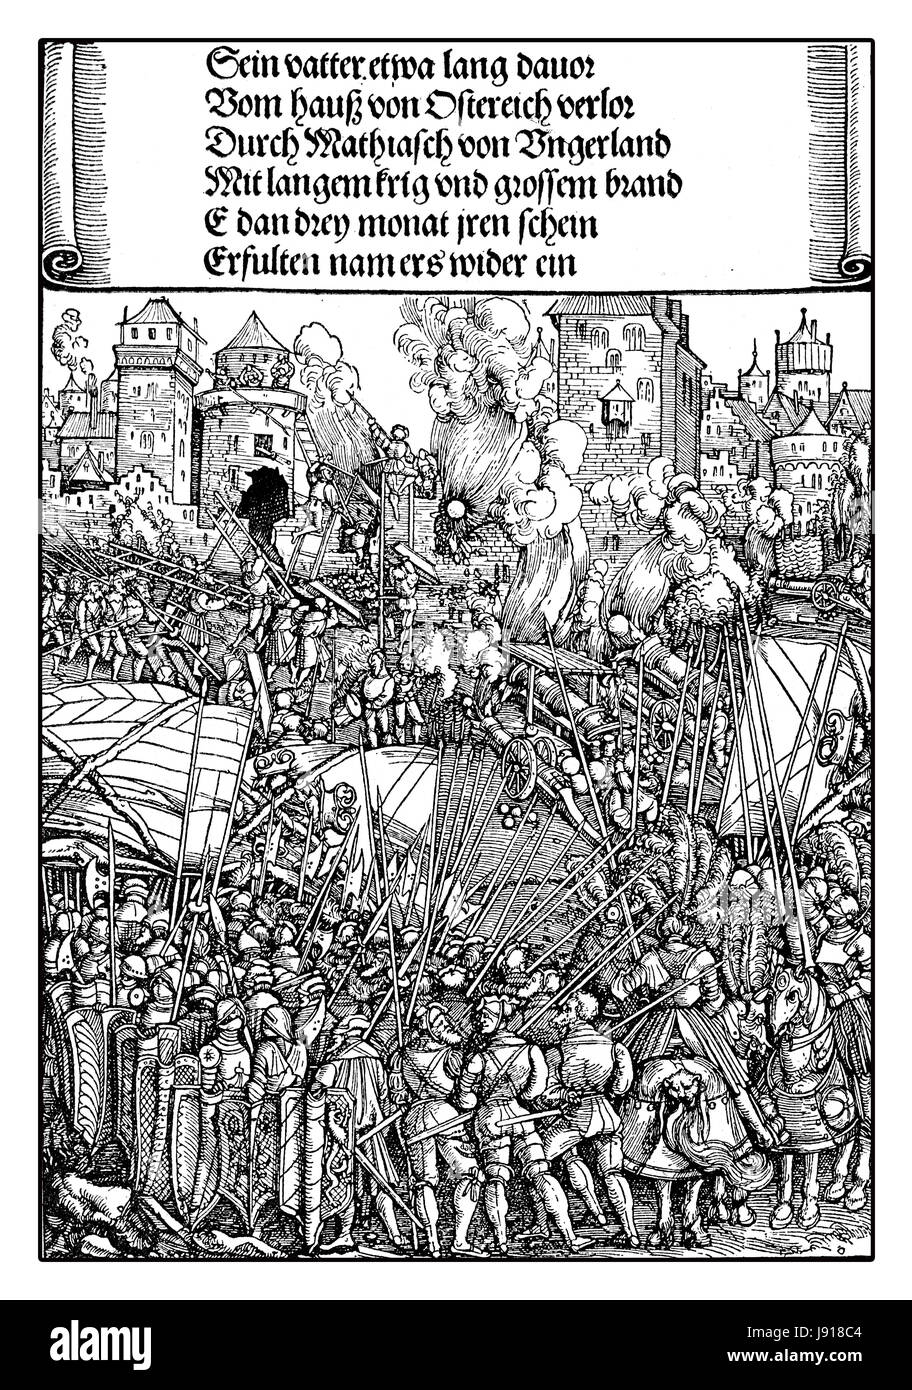 Siege and destruction of a city under Holy Roman Emperor Maximilian I, by Albrecht Dürer, XVI century Stock Photo